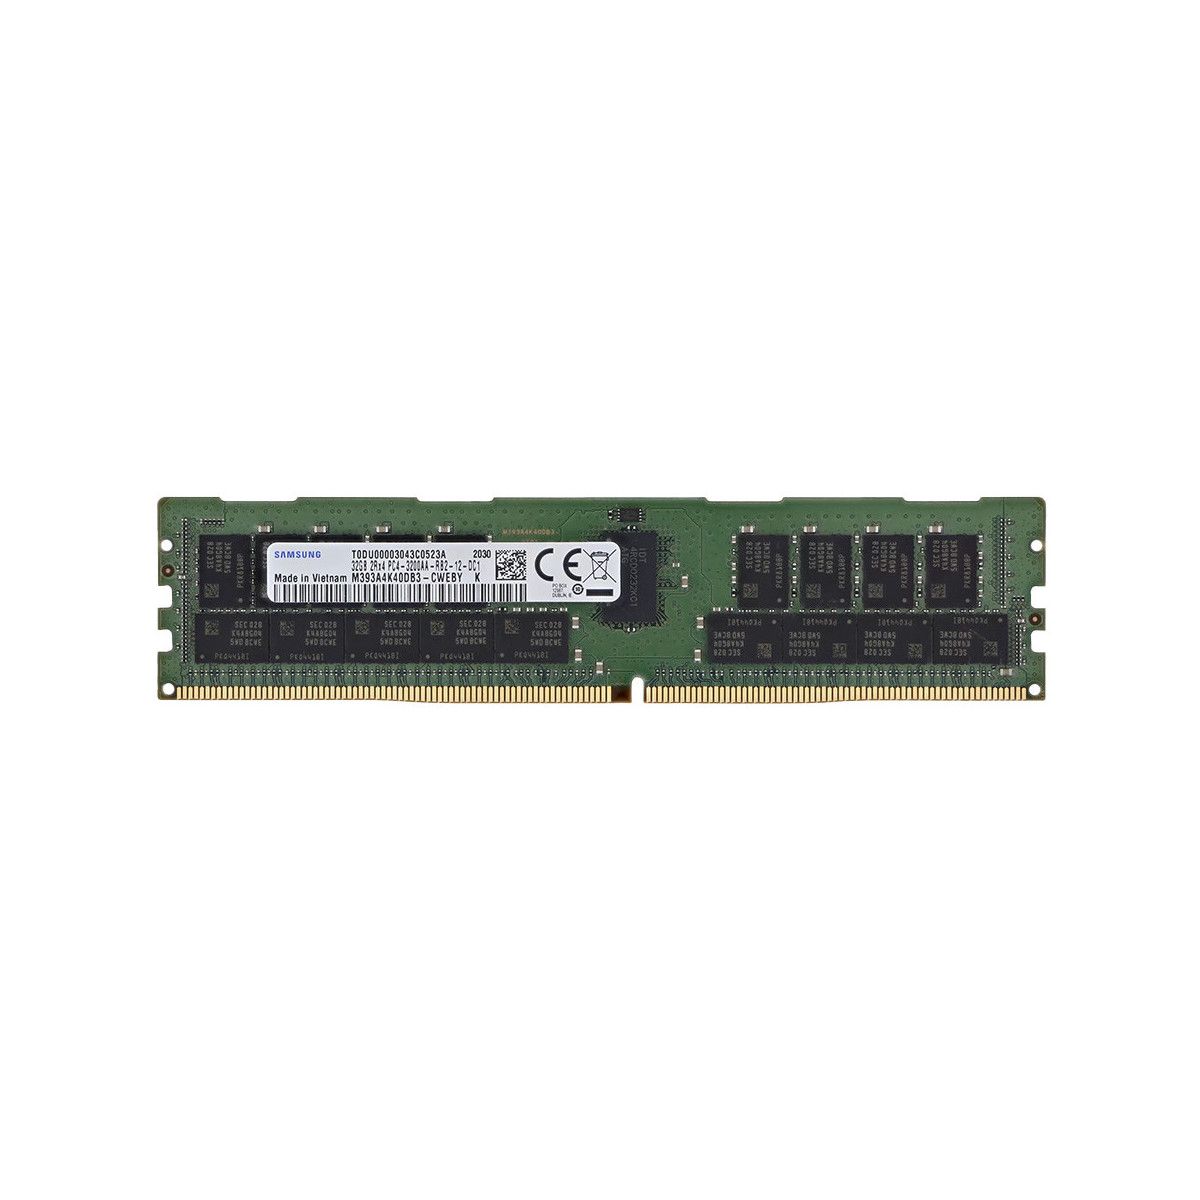 SNP75X1VC/32VXR-MS - Memstar 1x 32GB DDR4-3200 RDIMM PC4-25600R - Mem-Star OEM compatibile Memoria 1 - Memstar 